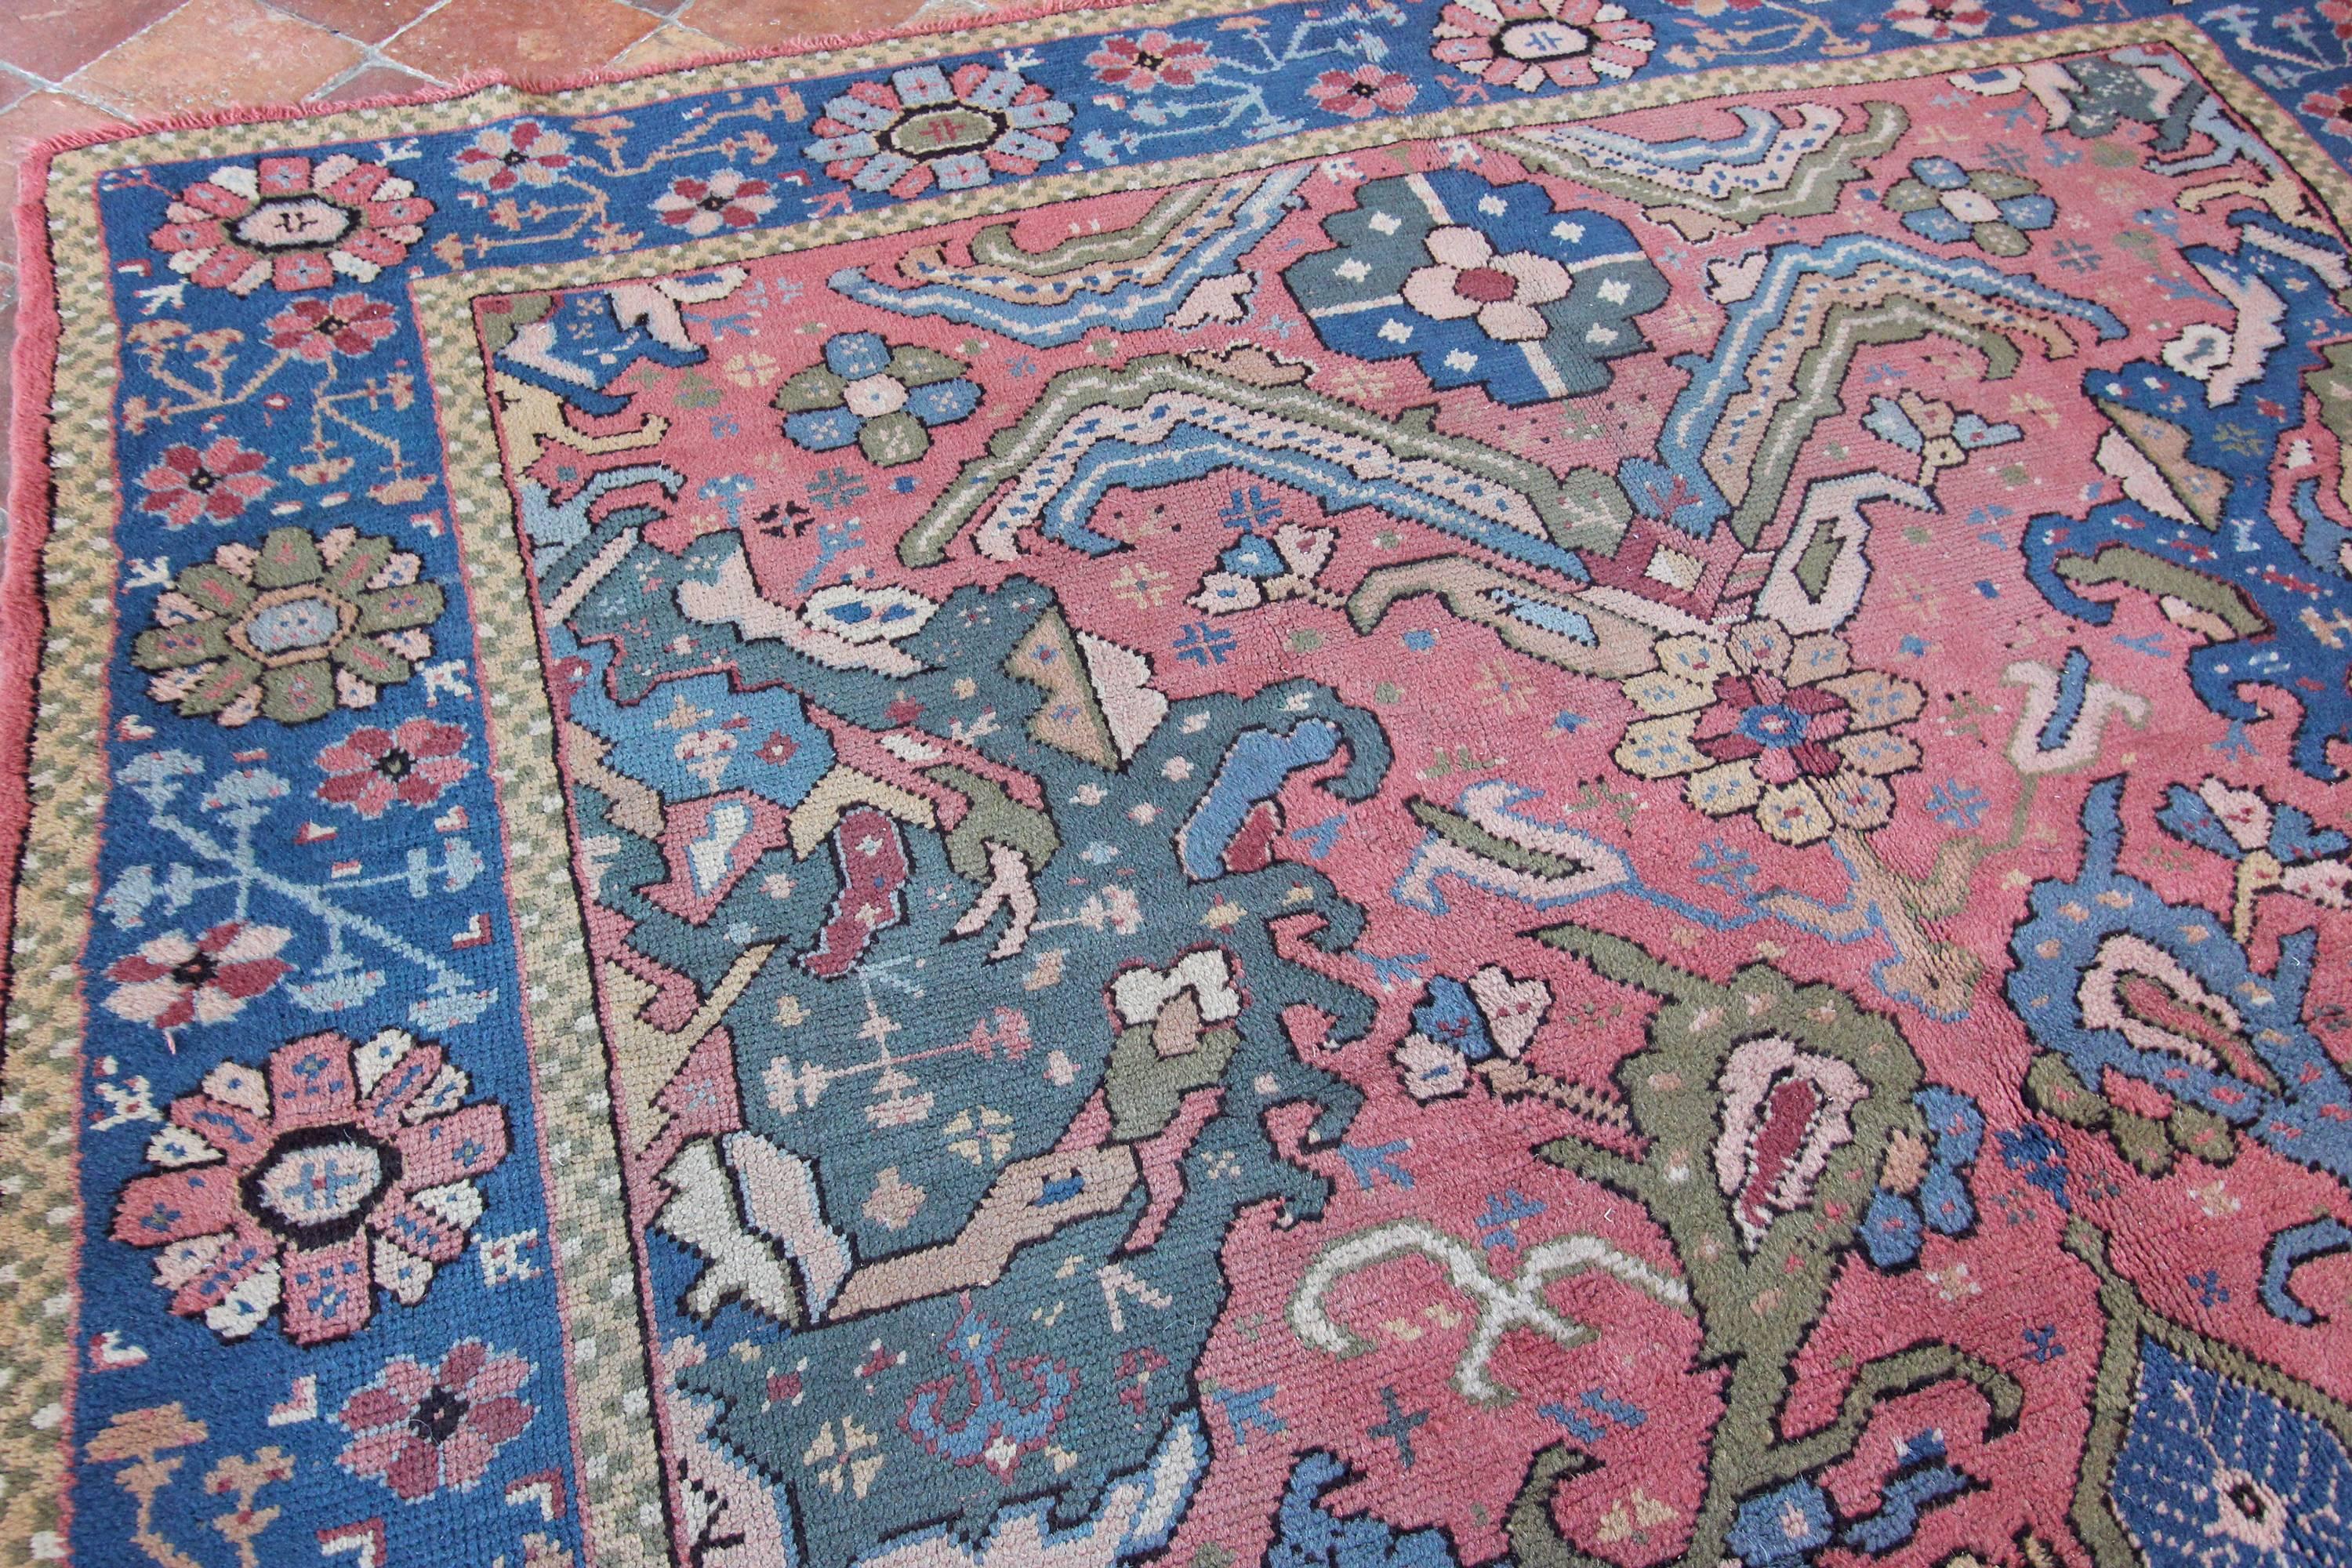 Hand-Woven Antique Oushak Carpet, Western Anatolia